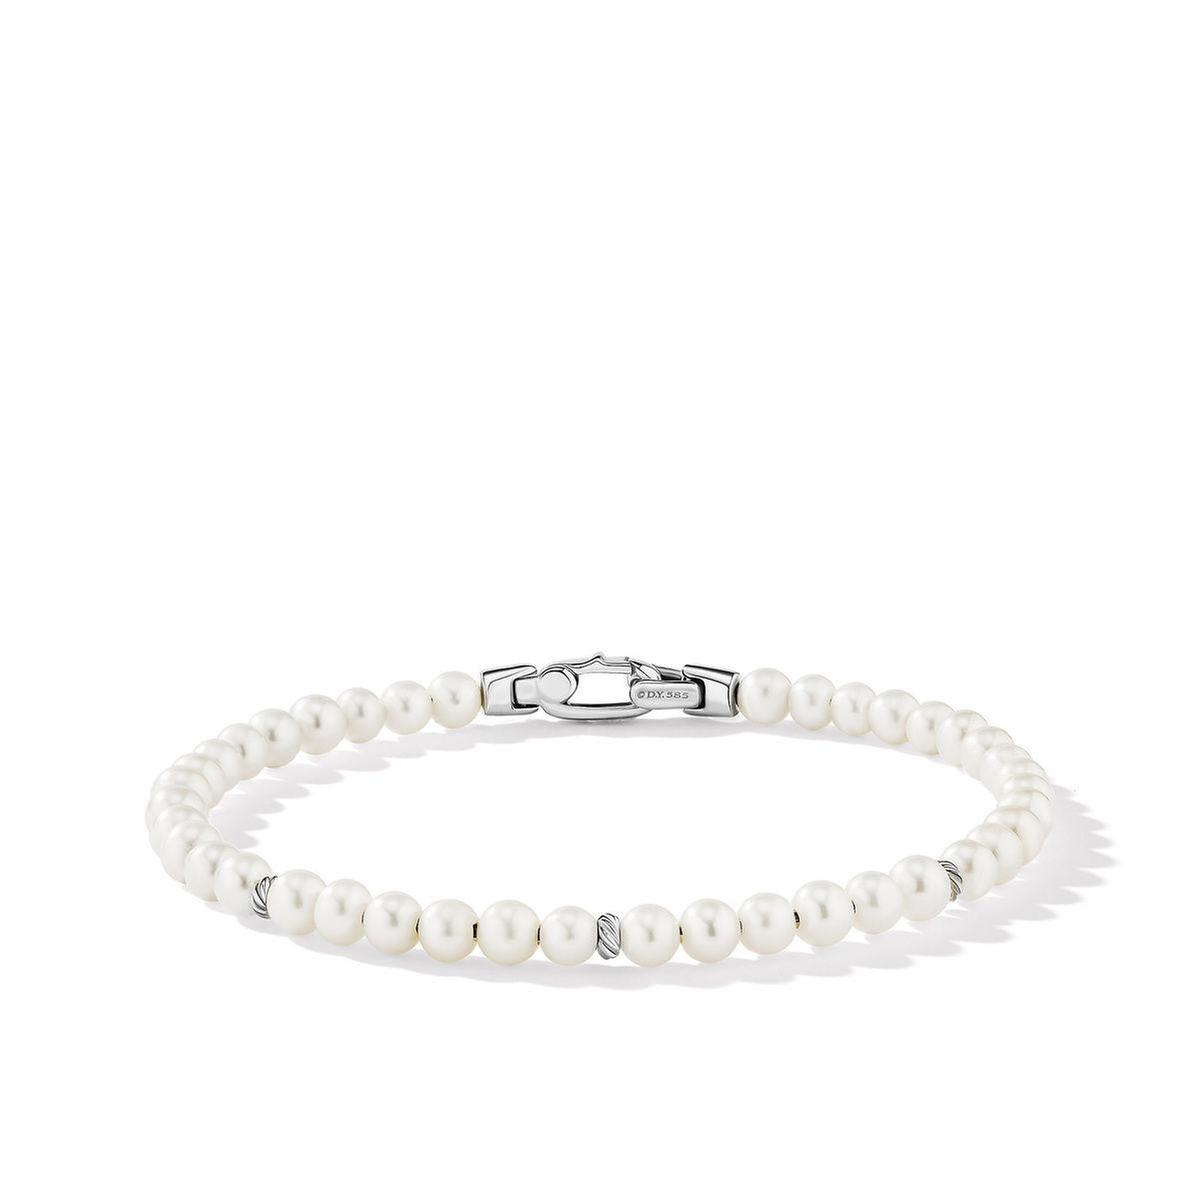 David Yurman Spiritual Beads Bracelet with Pearls - Medium